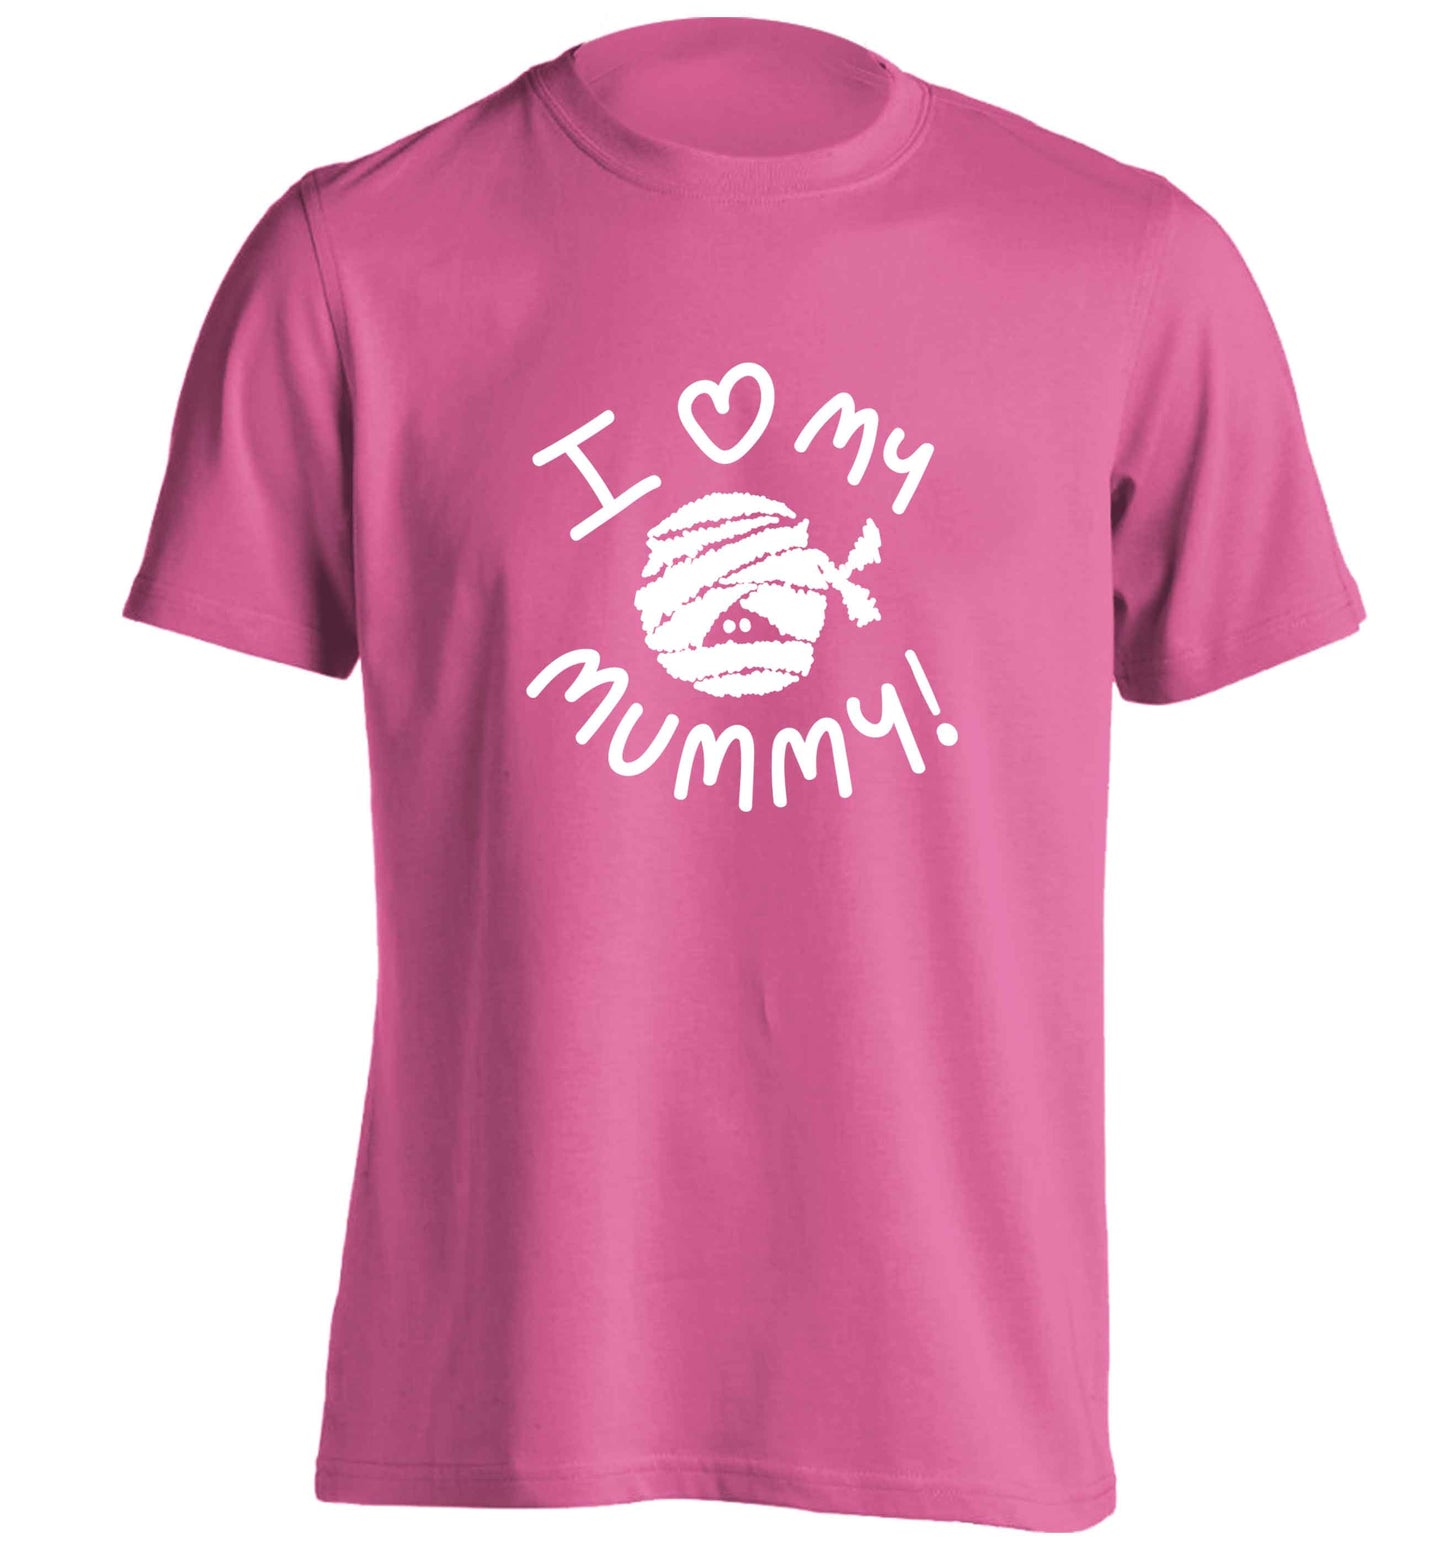 I love my mummy halloween pun adults unisex pink Tshirt 2XL